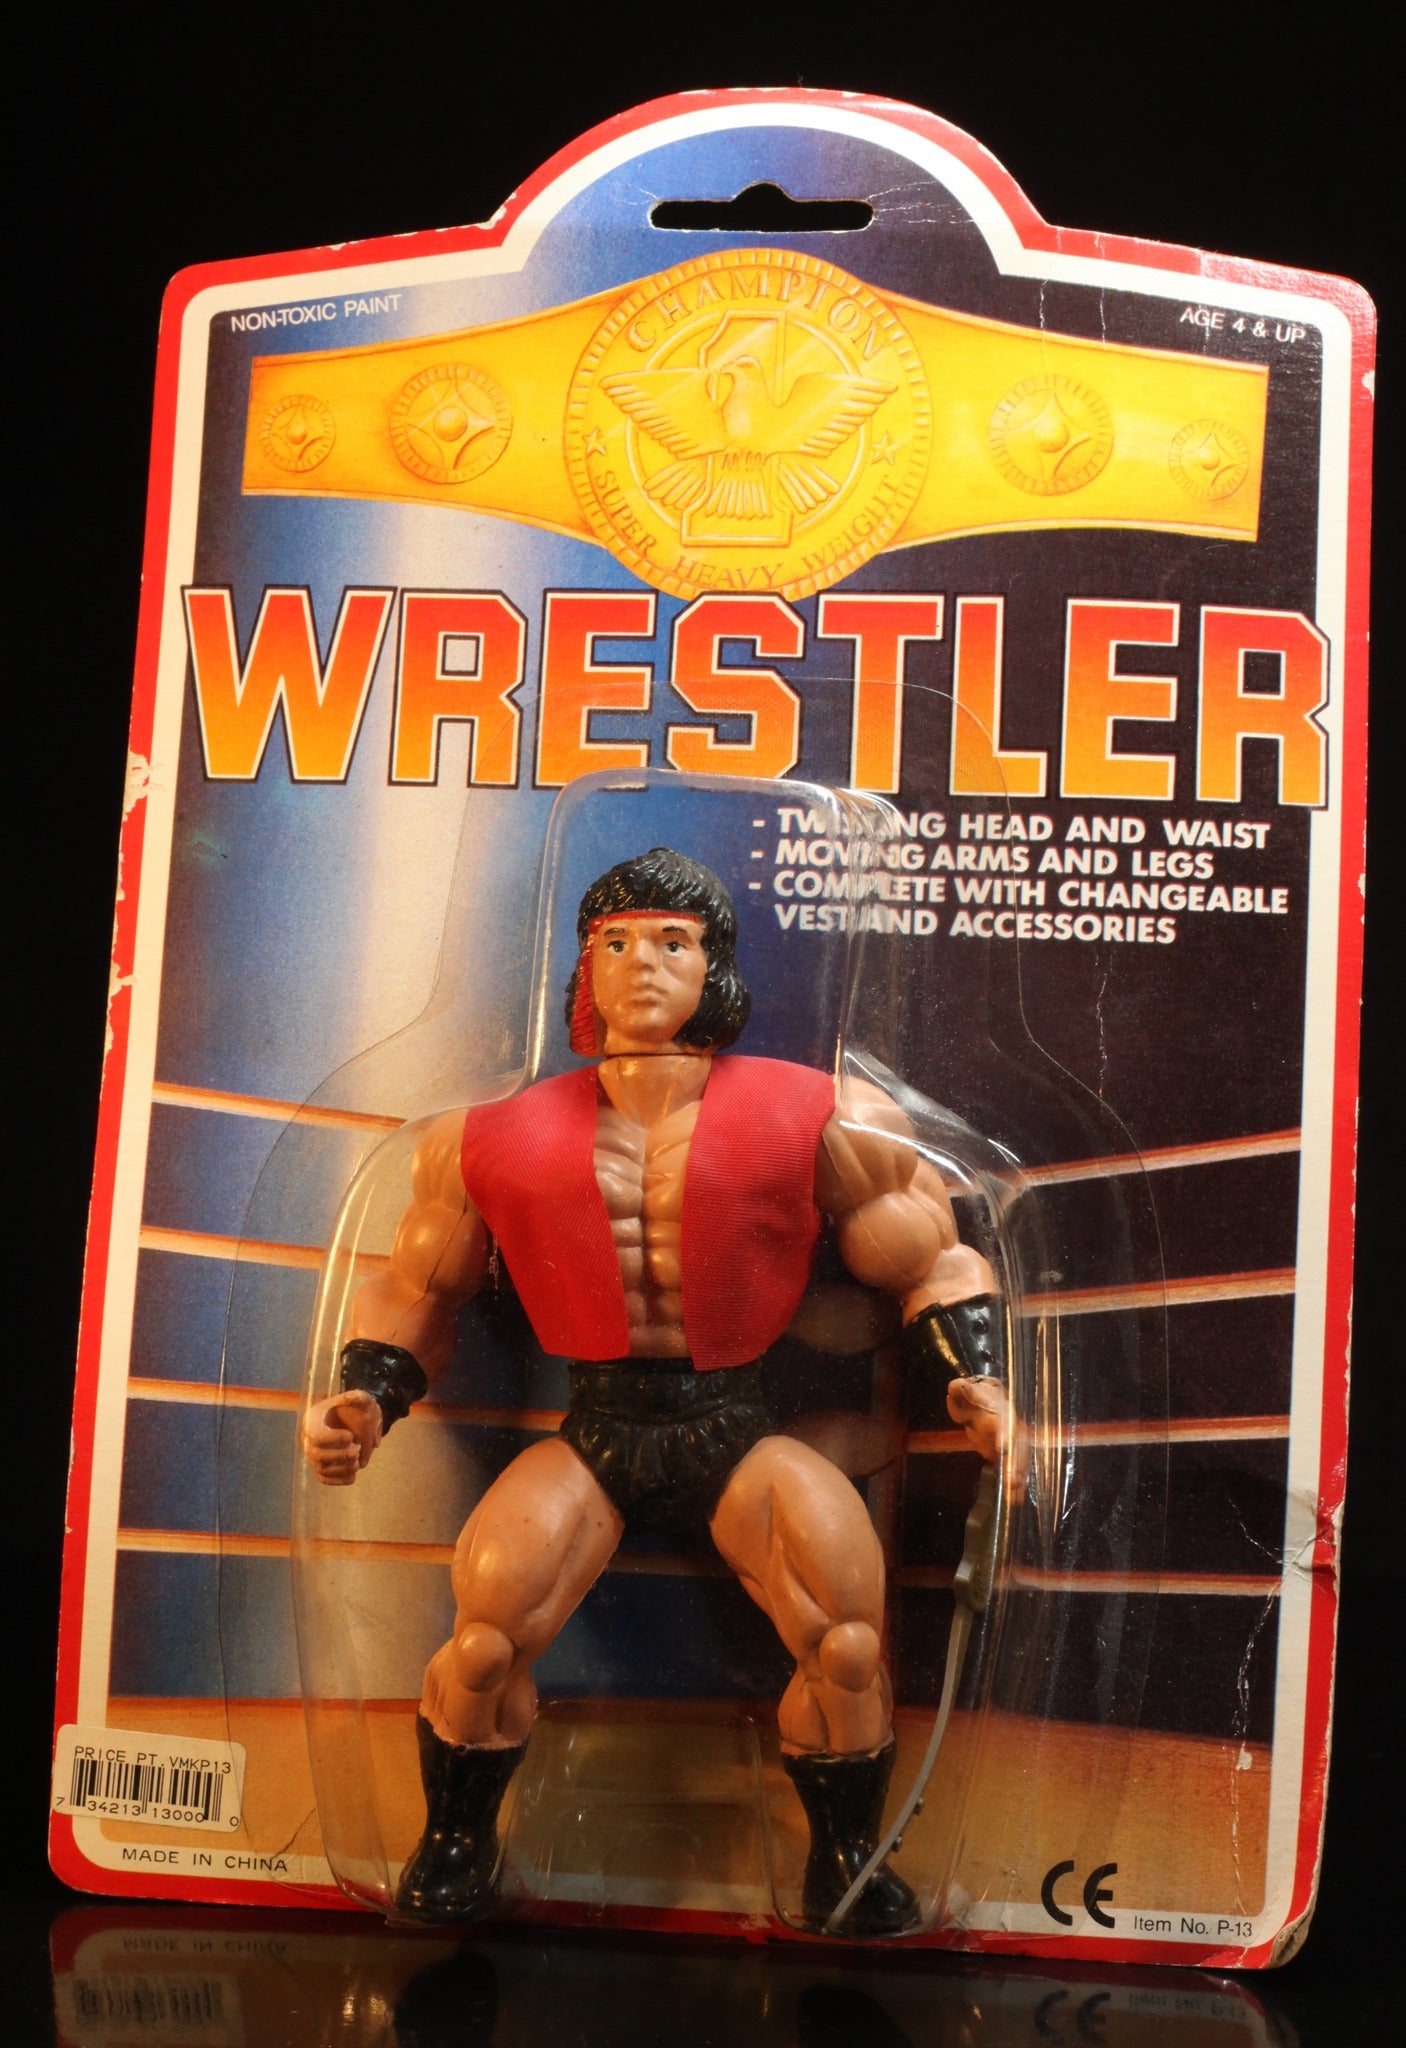 Wrestler [a.k.a. "Combo" Wrestlers] Bootleg/Knockoff Wrestling Action Figures